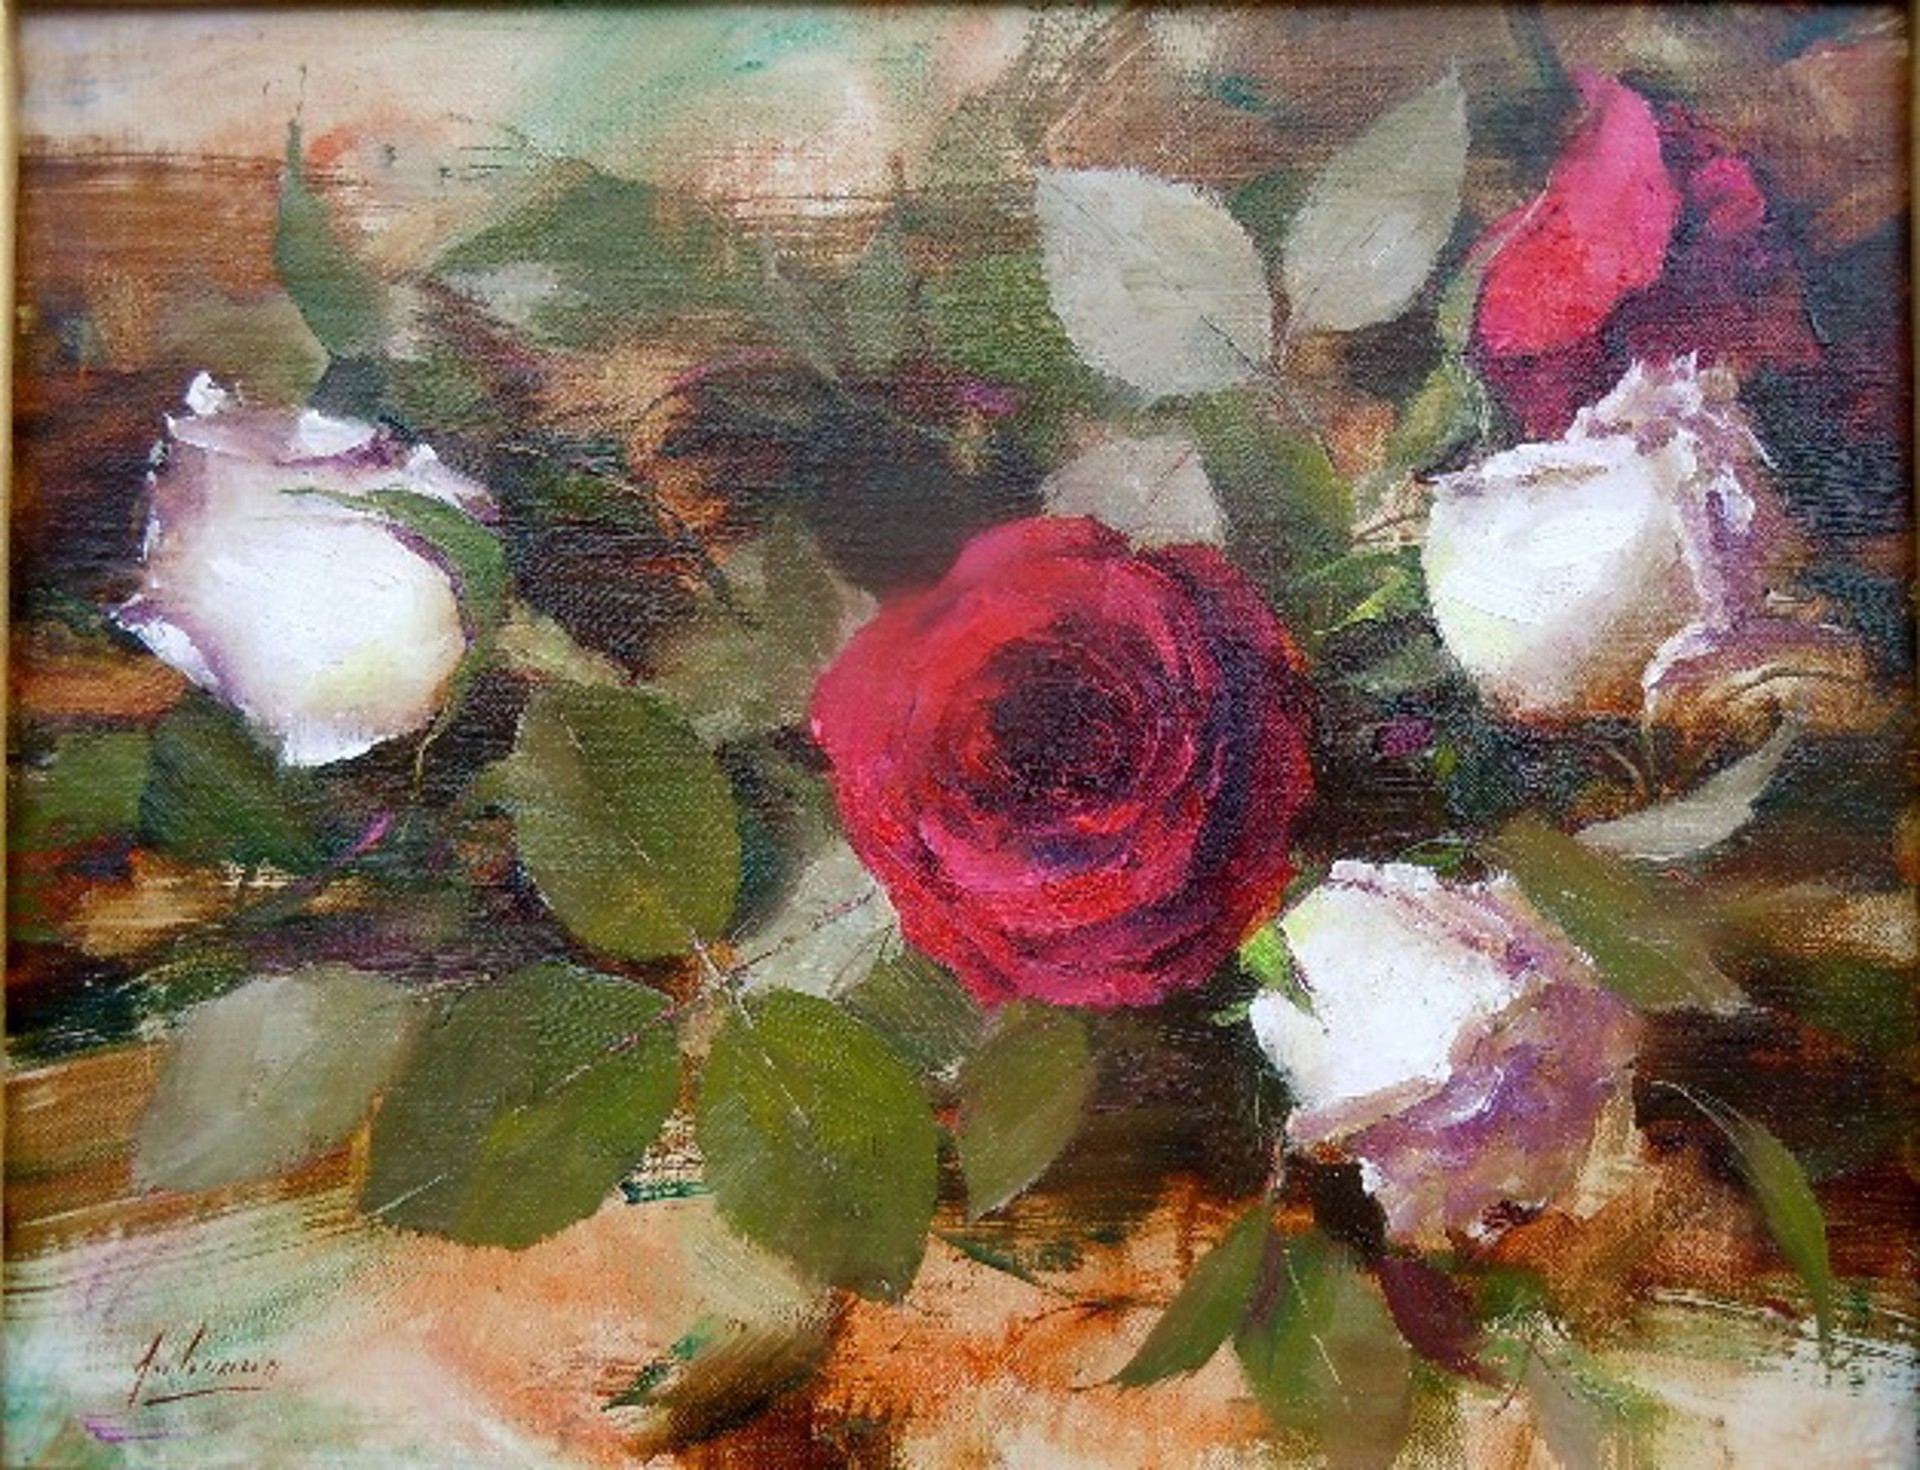 Roses by Robert Johnson